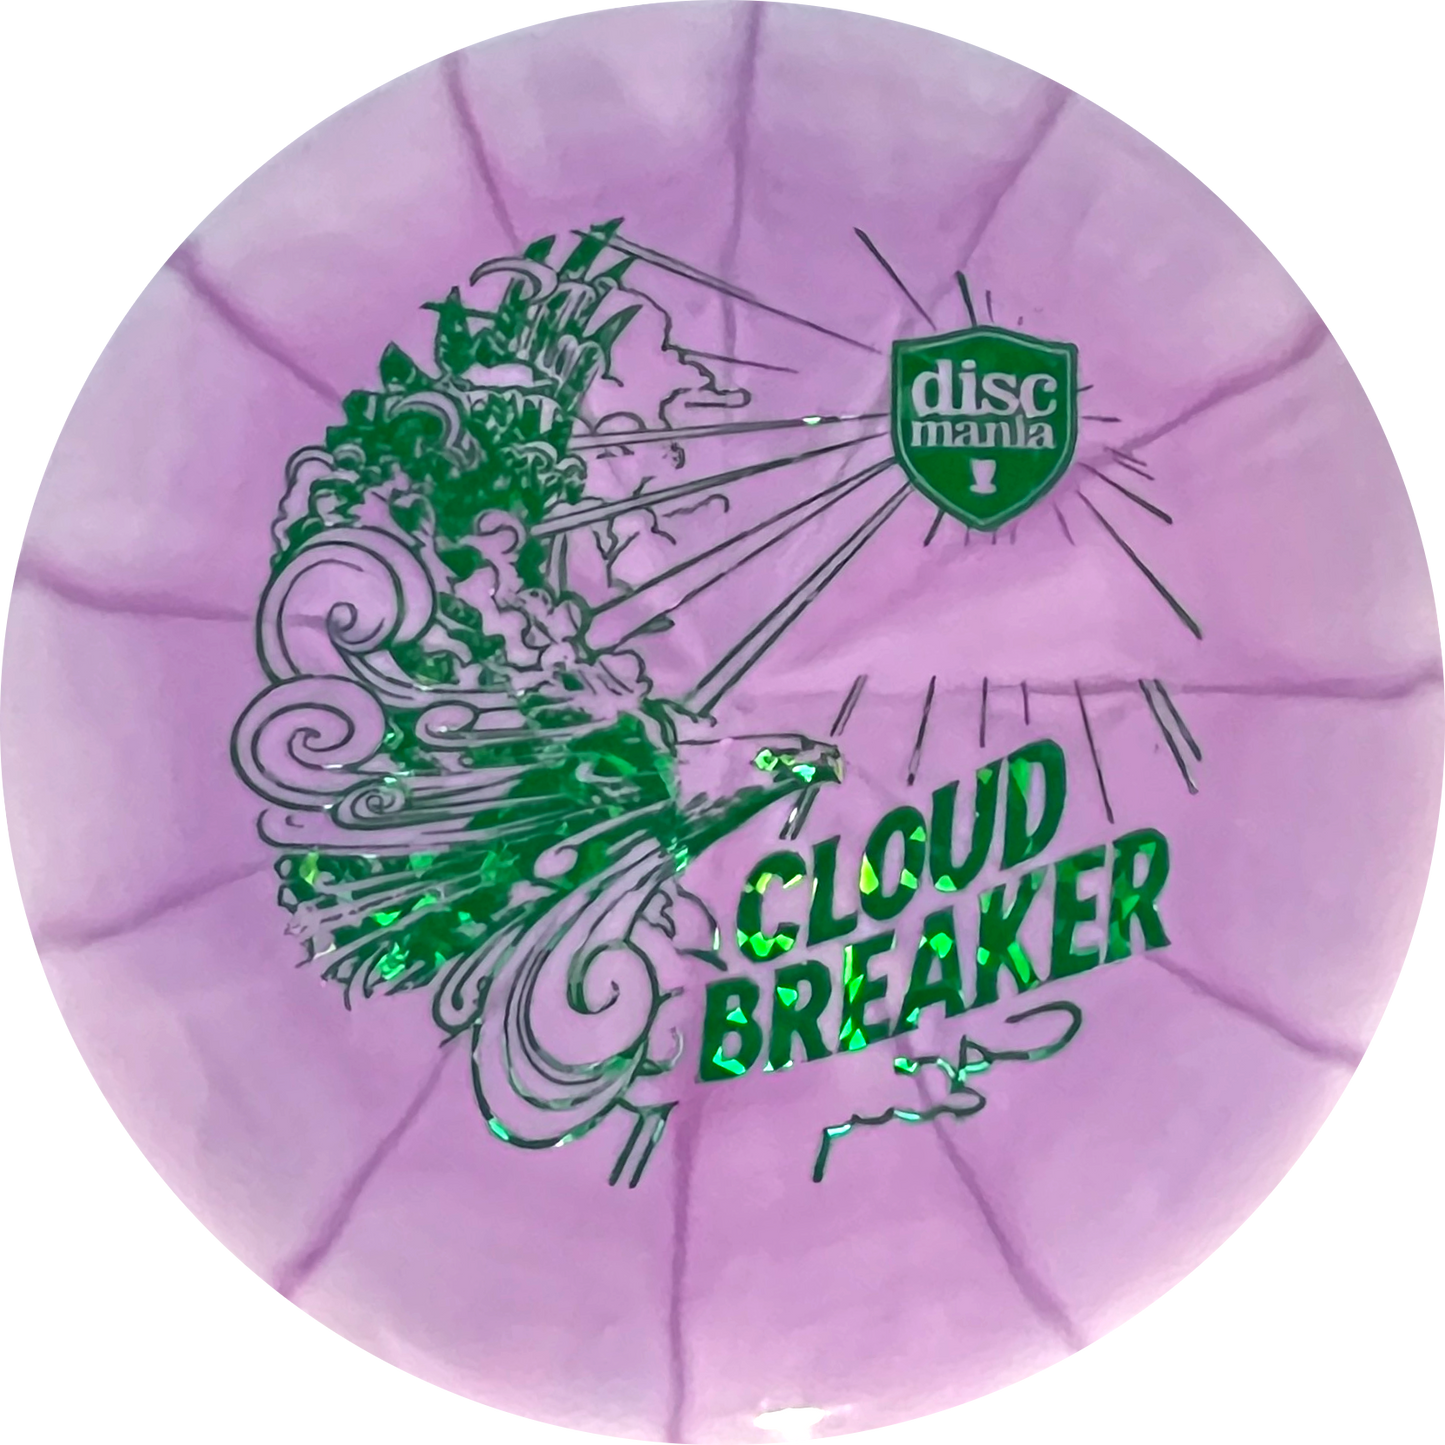 Cloudbreaker April Jewel Link